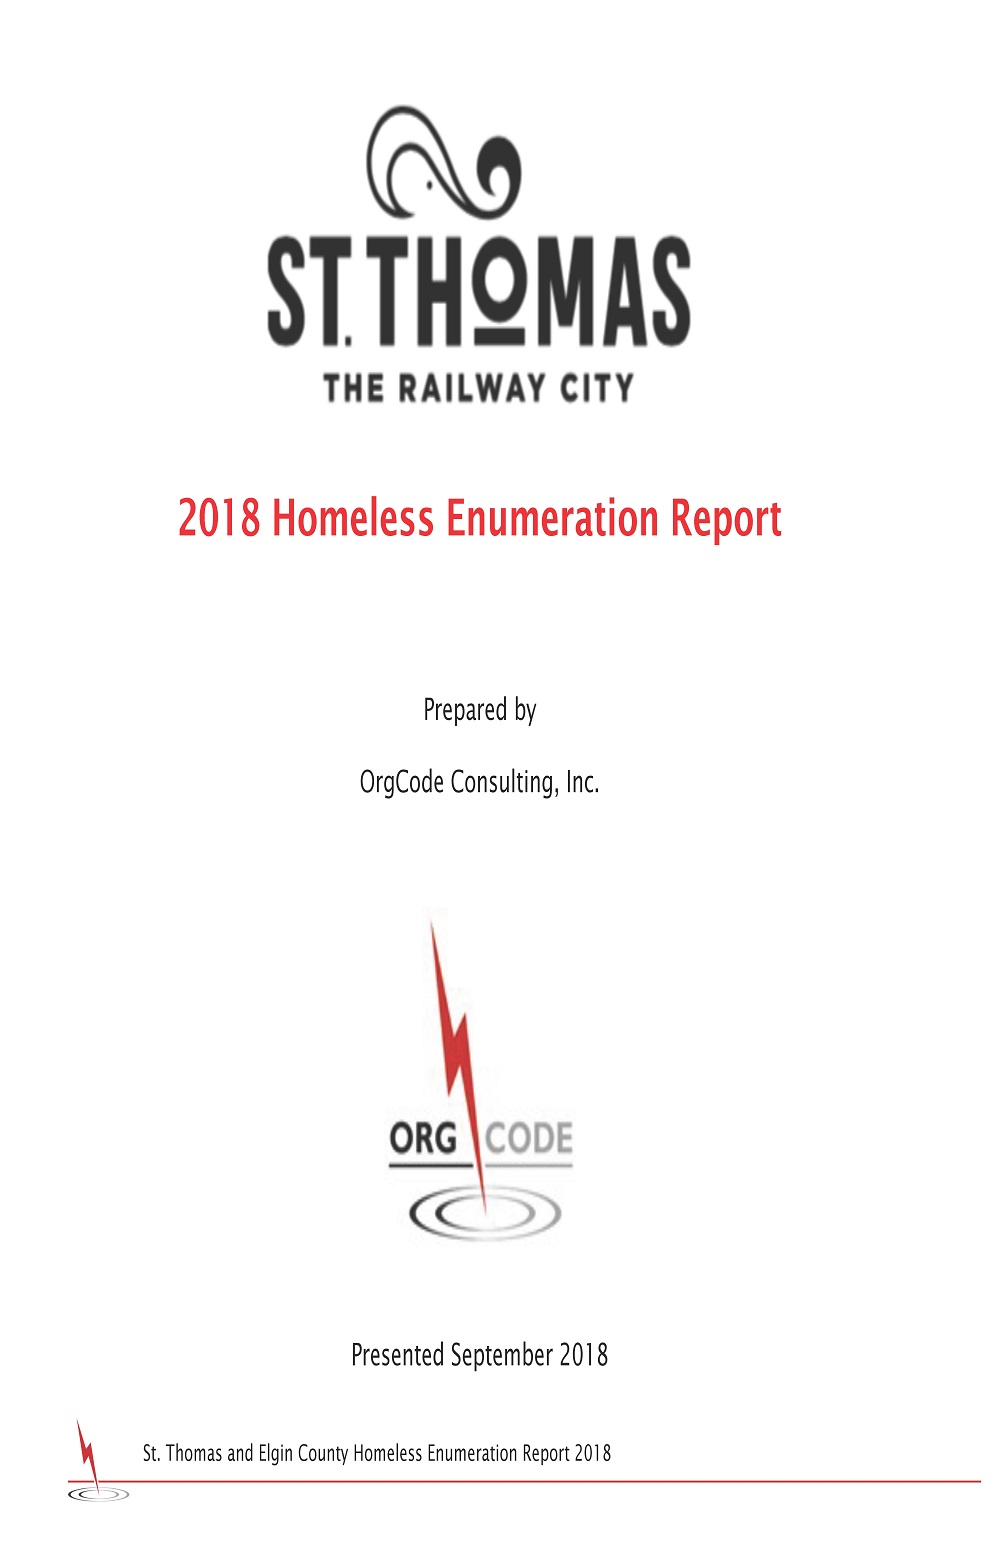 Homeless Enumeration Report 2018